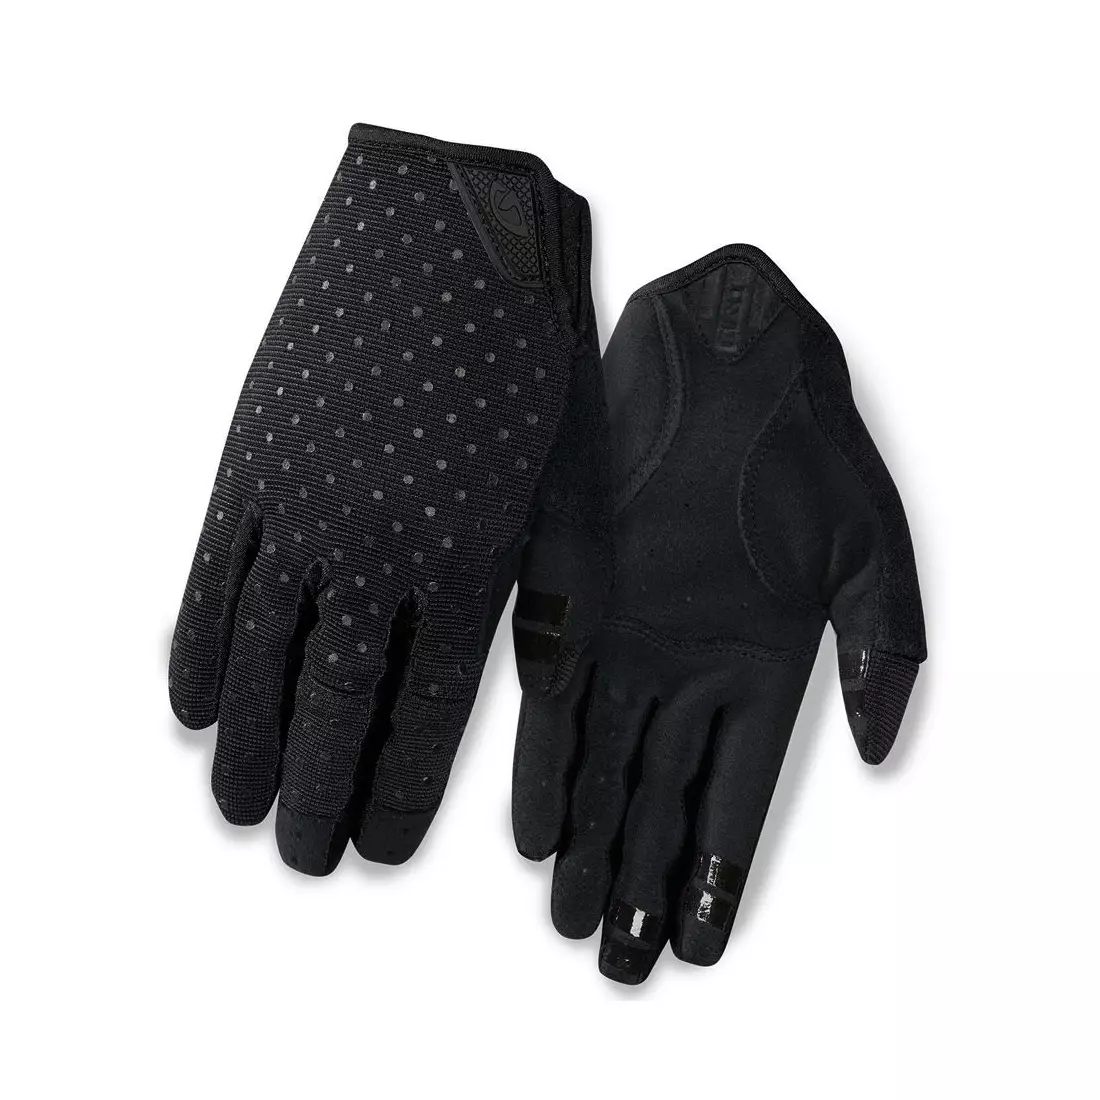 GIRO women's cycling gloves la dnd long finger black dots GR-7095340